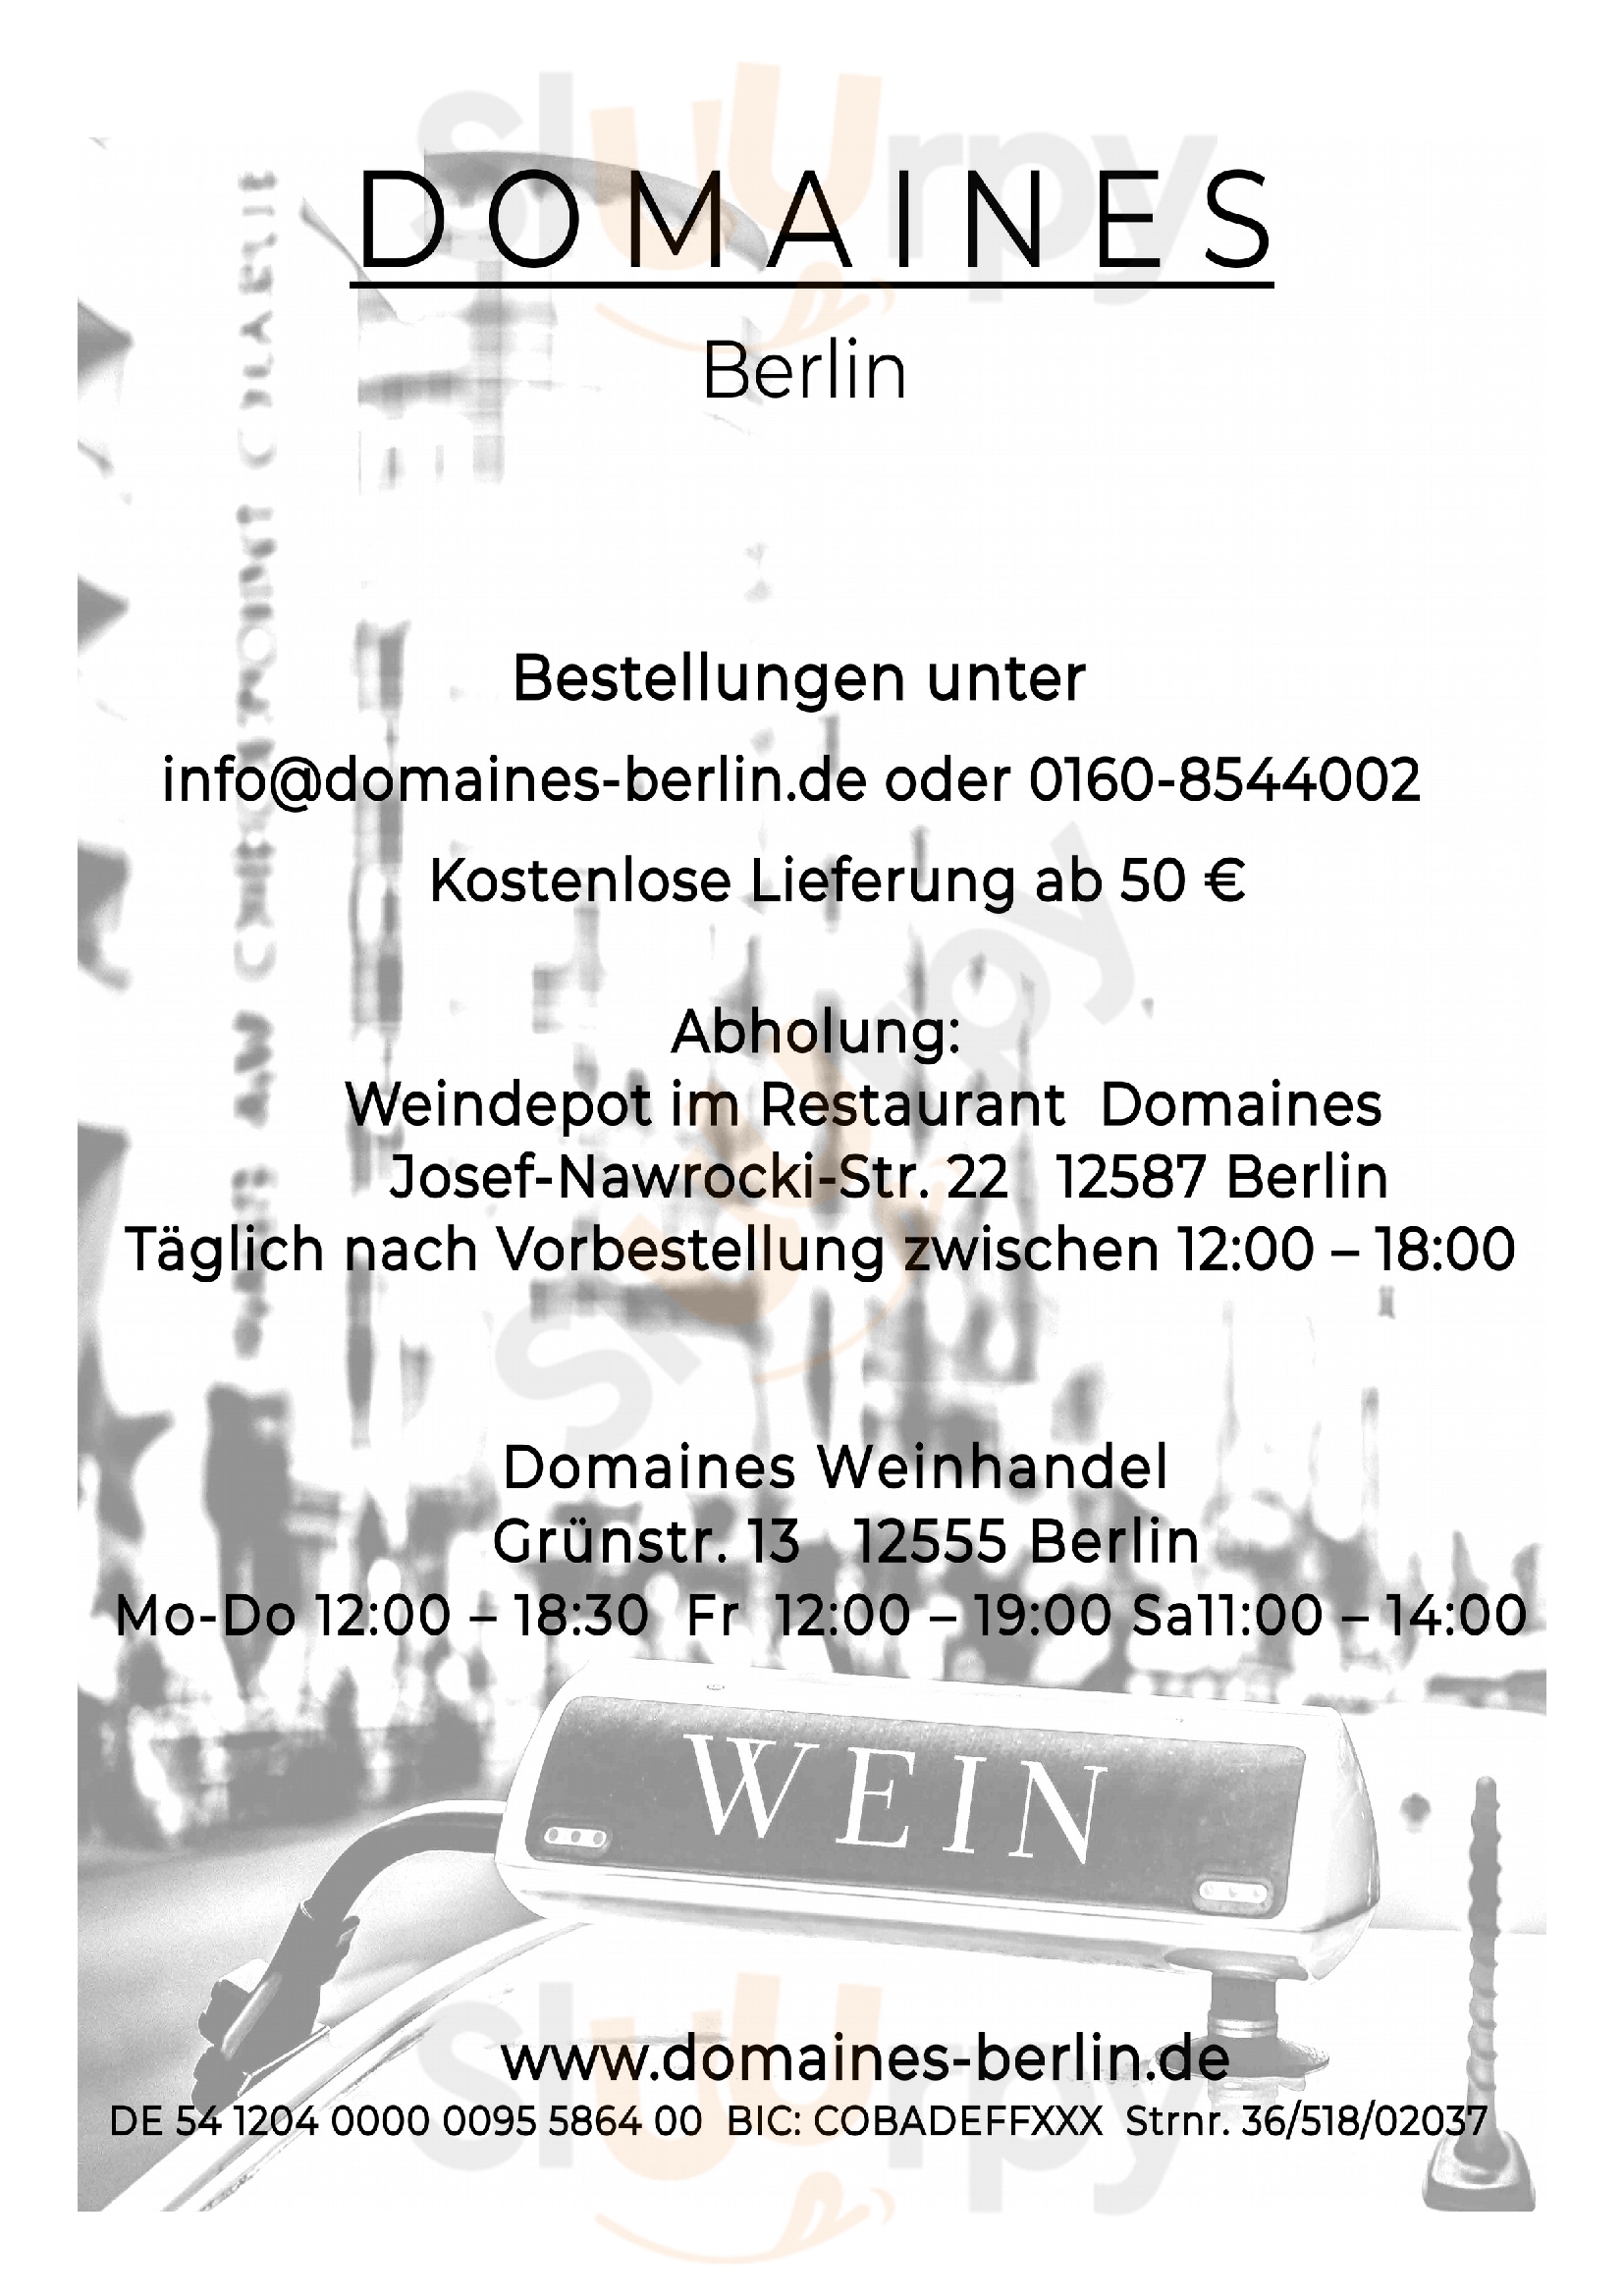 Domaines Berlin Menu - 1